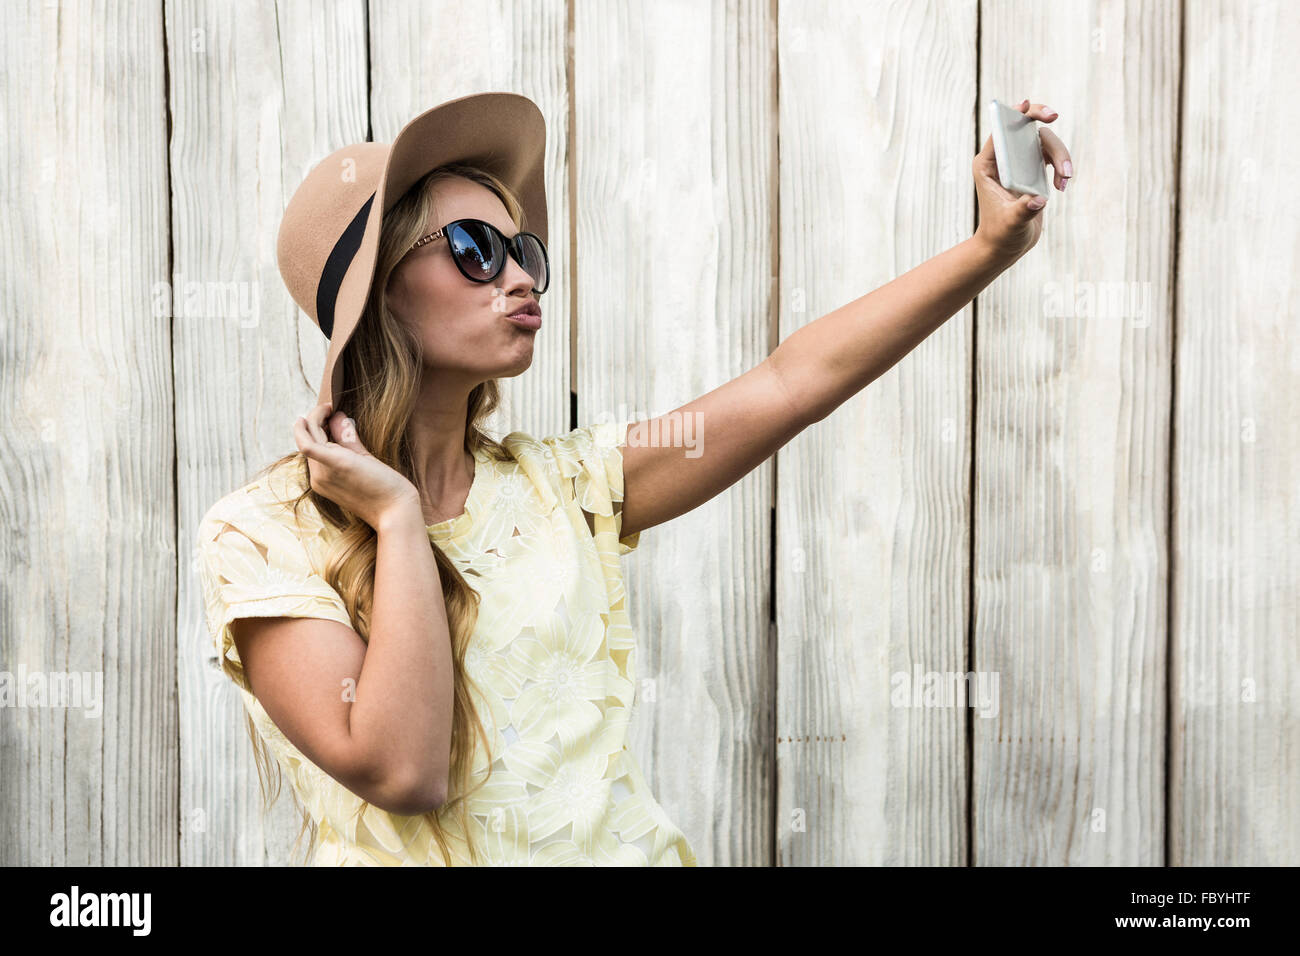 Happy woman taking a selfie Stock Photo